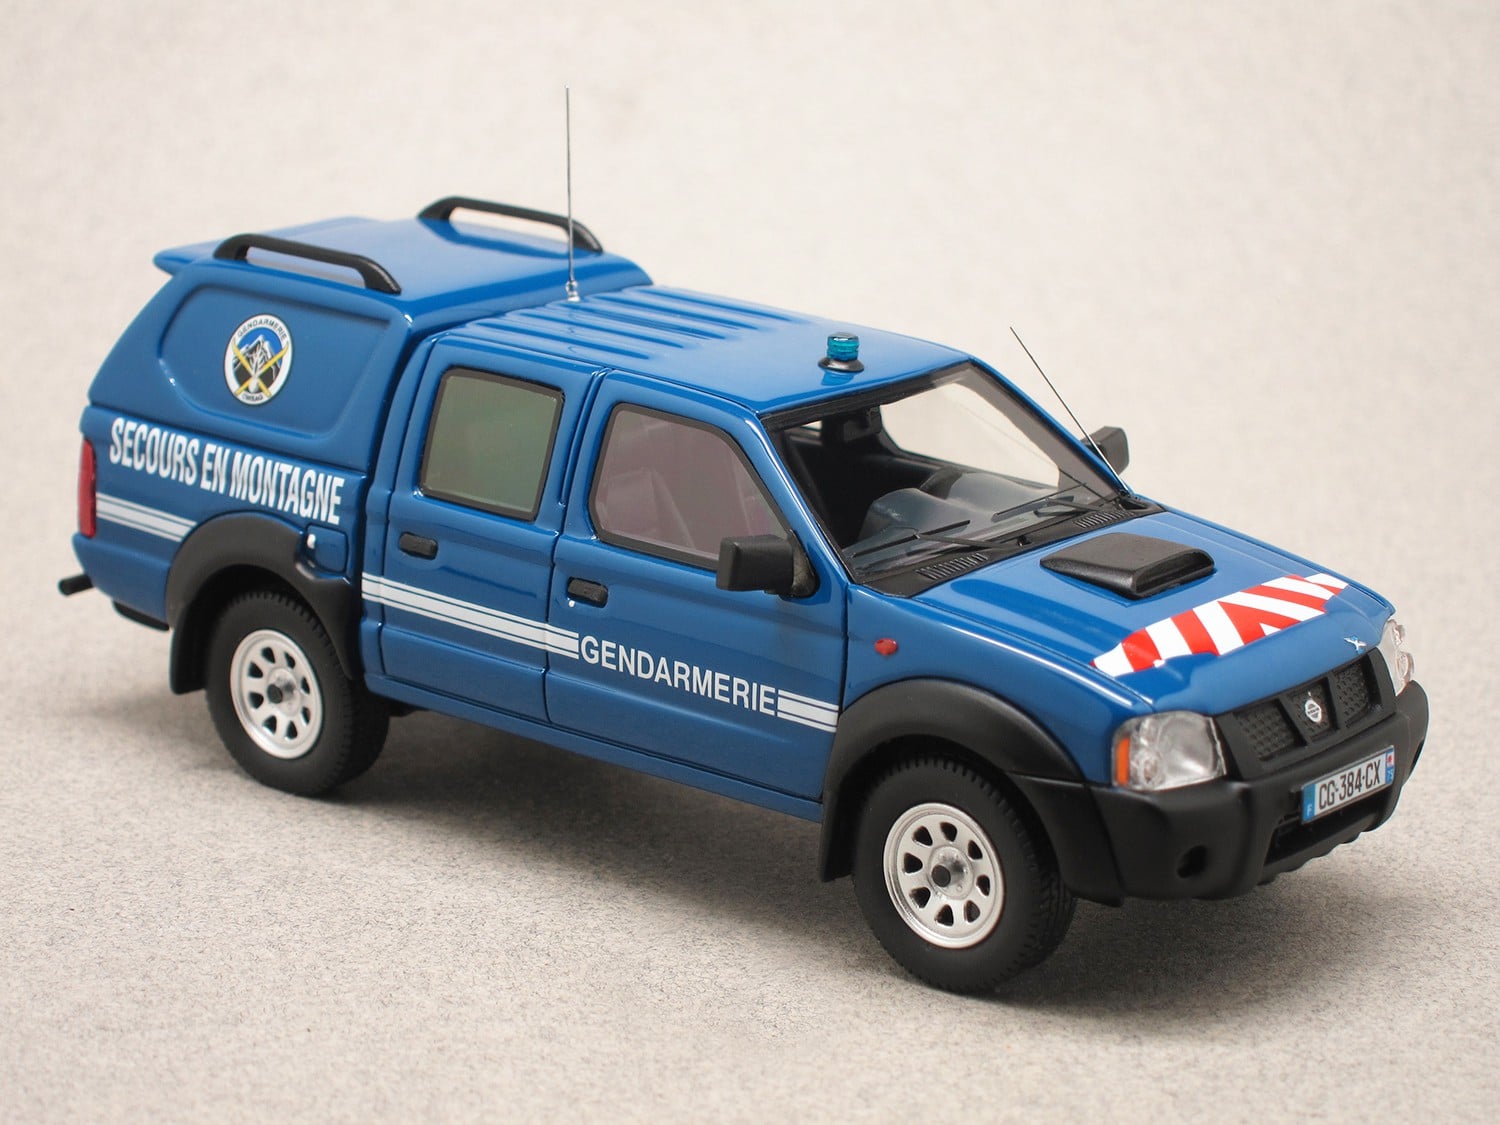 Nissan NP300 Gendarmerie (Alarme) 1/43e